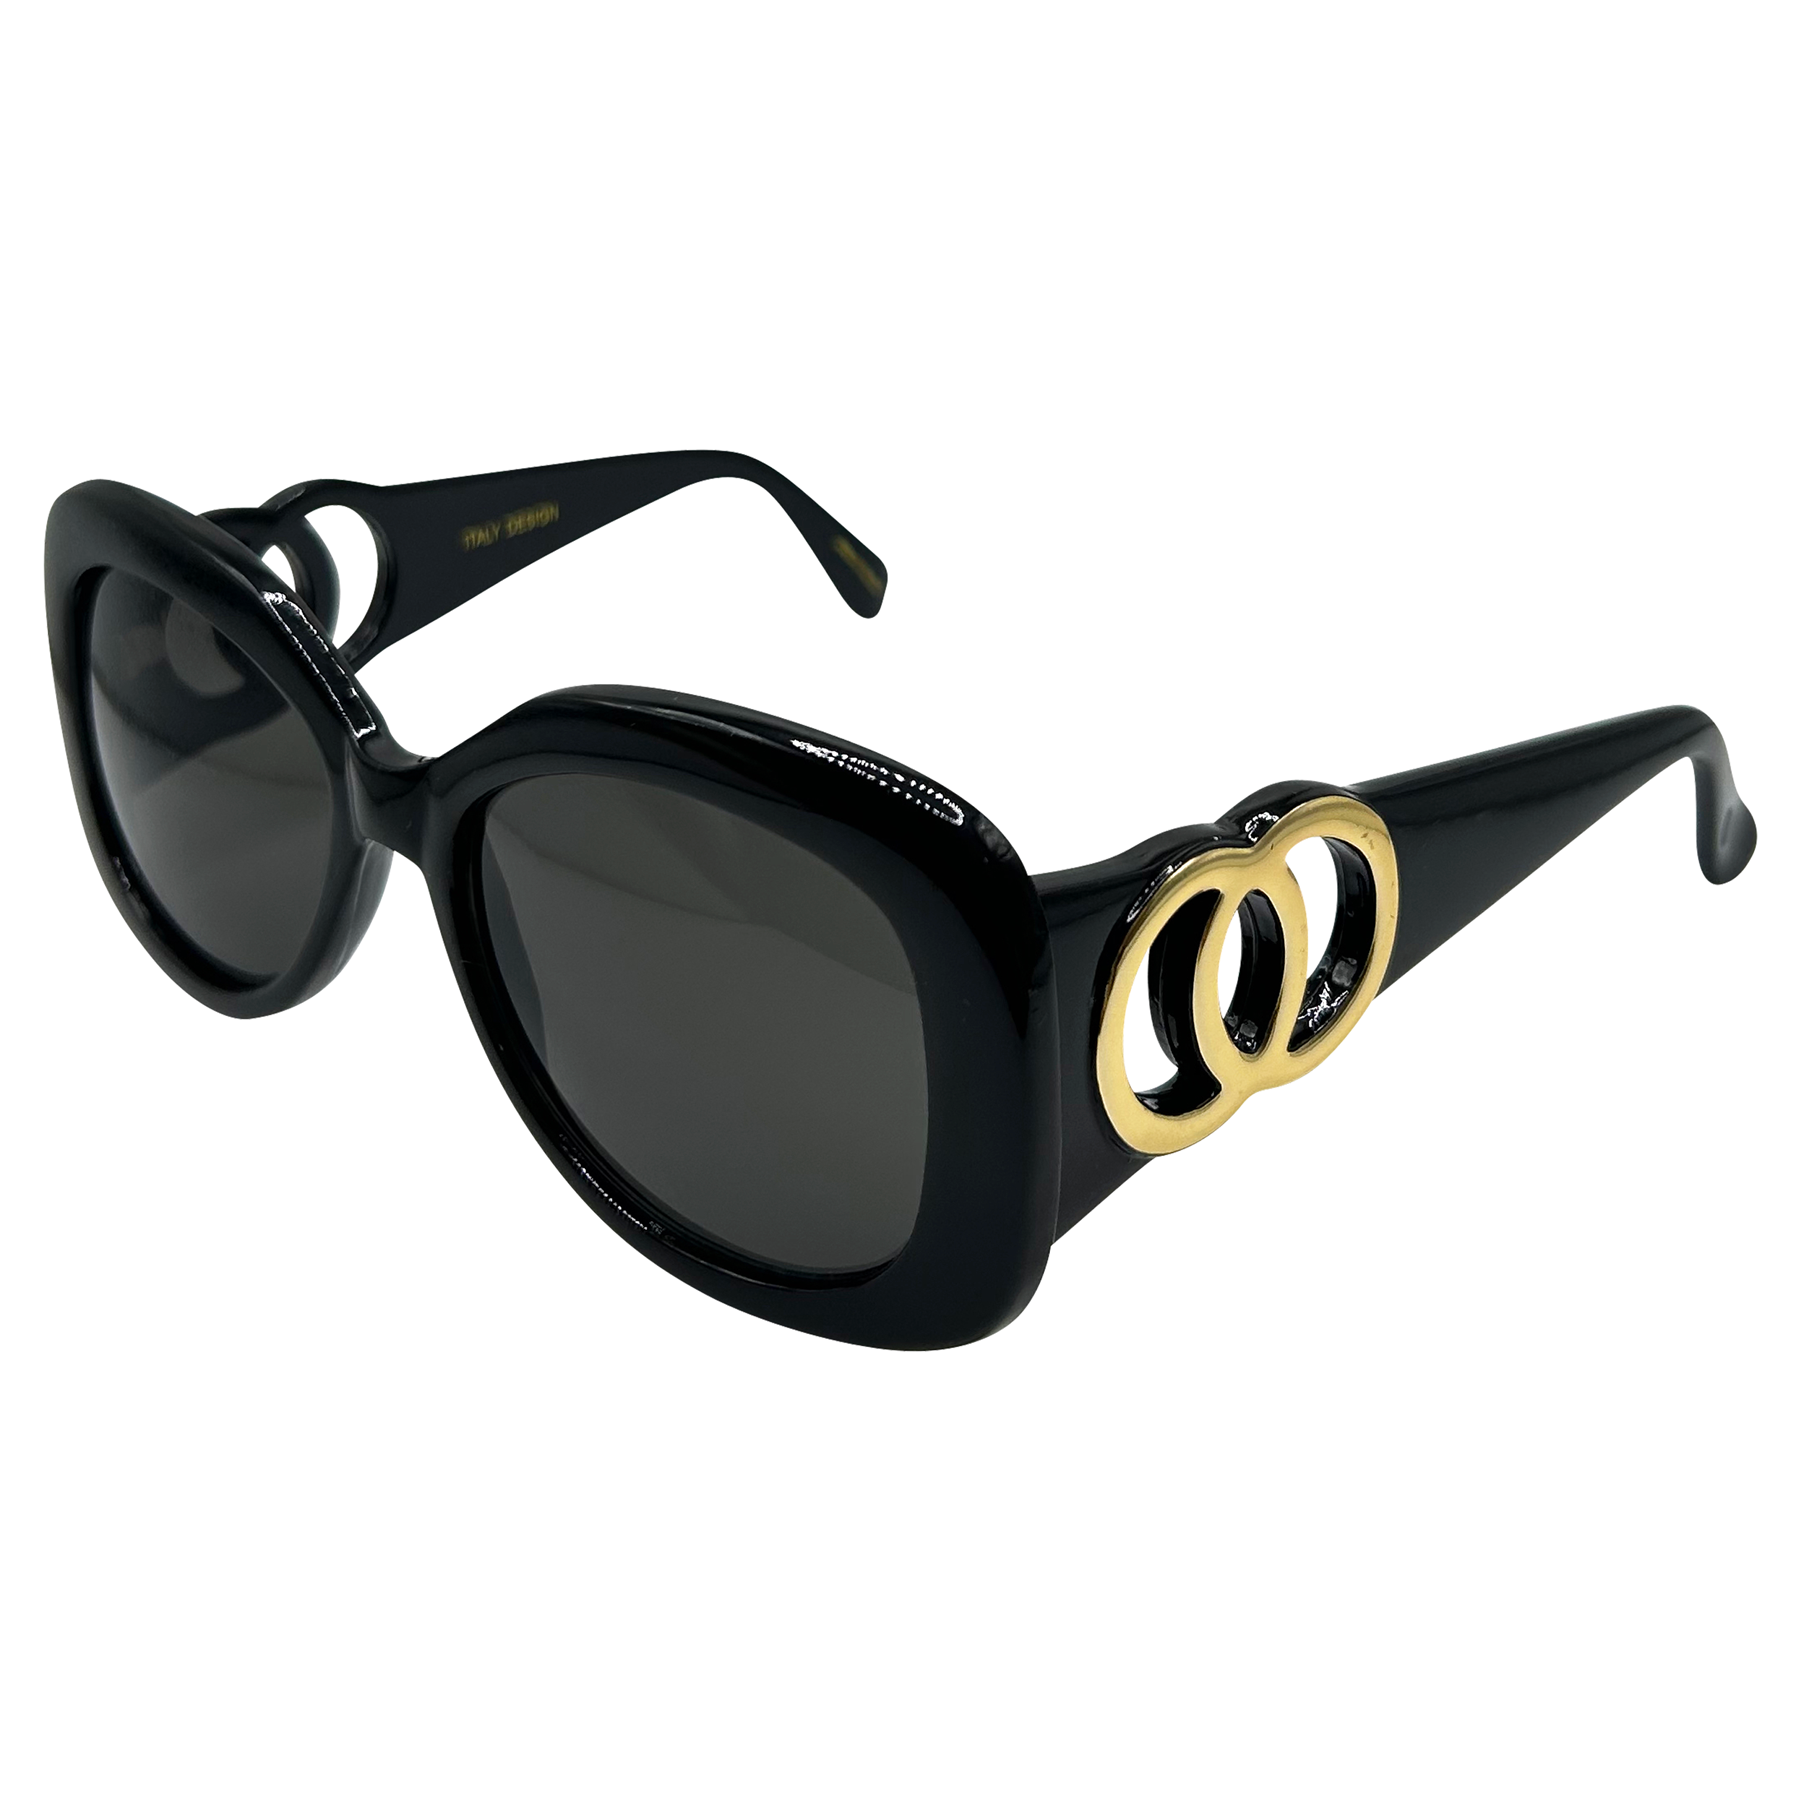 Shop BESITOS Black/Super Dark Mod 90s Vintage Sunglasses